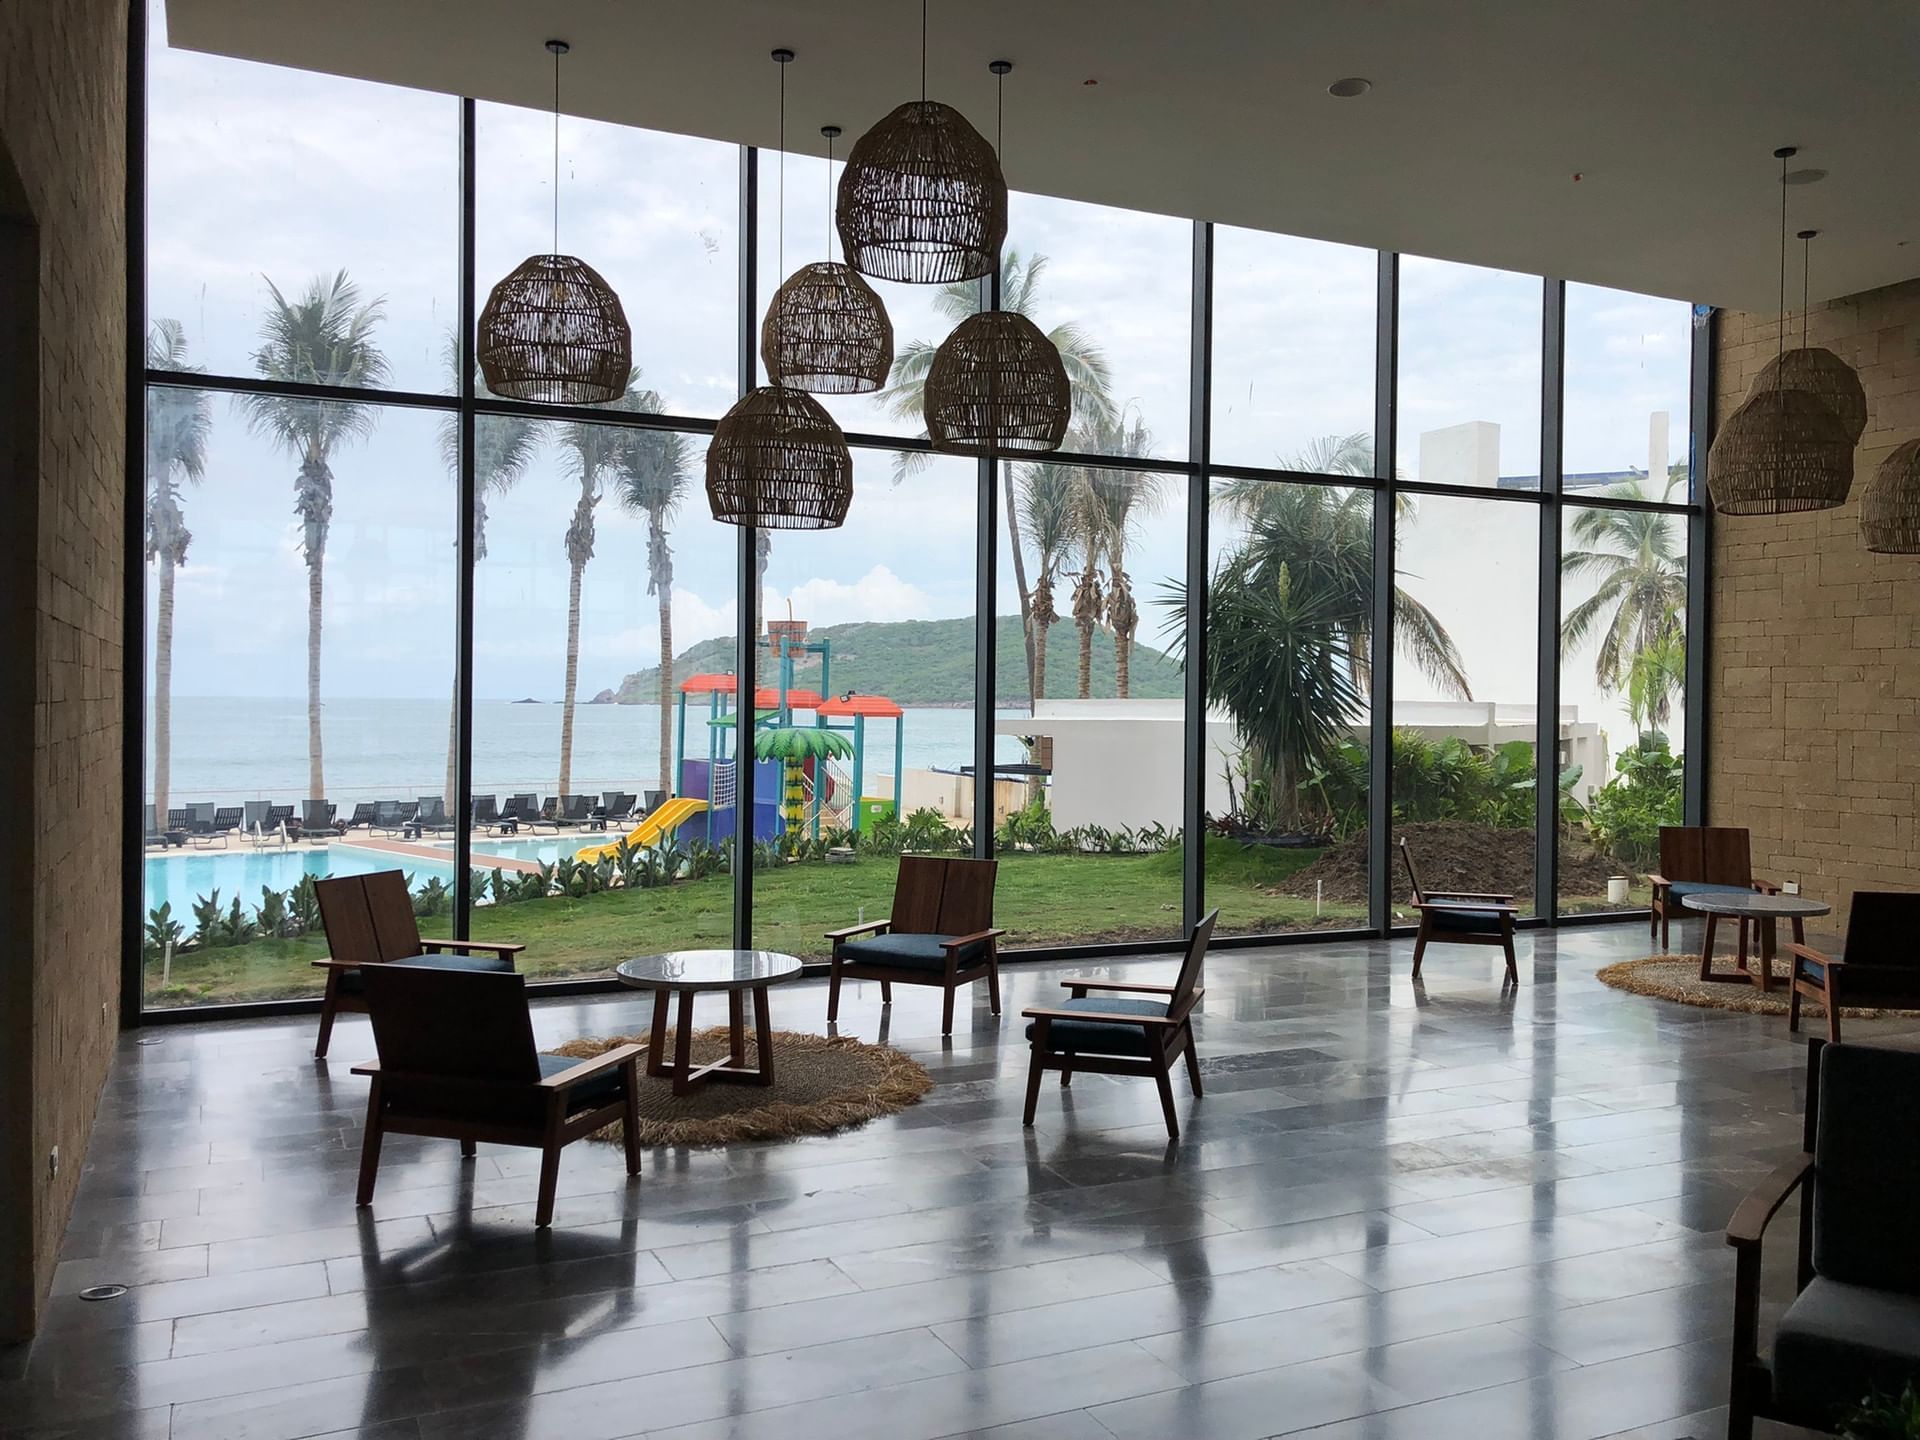 Outdoor view from the lobby at Viaggio Resort Mazatlan